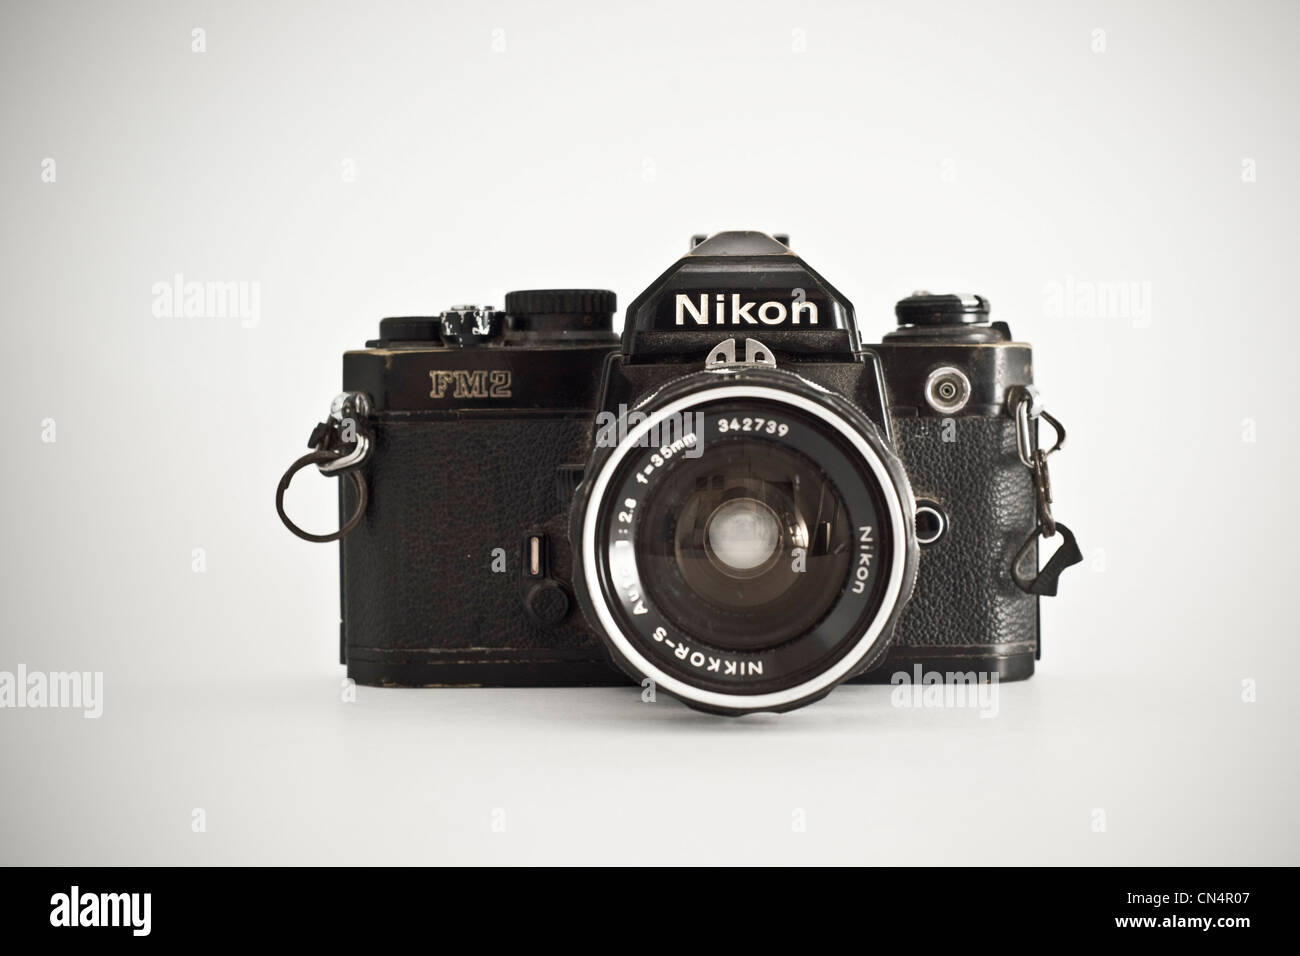 Classic old camera Nikon FM2 Stock Photo - Alamy